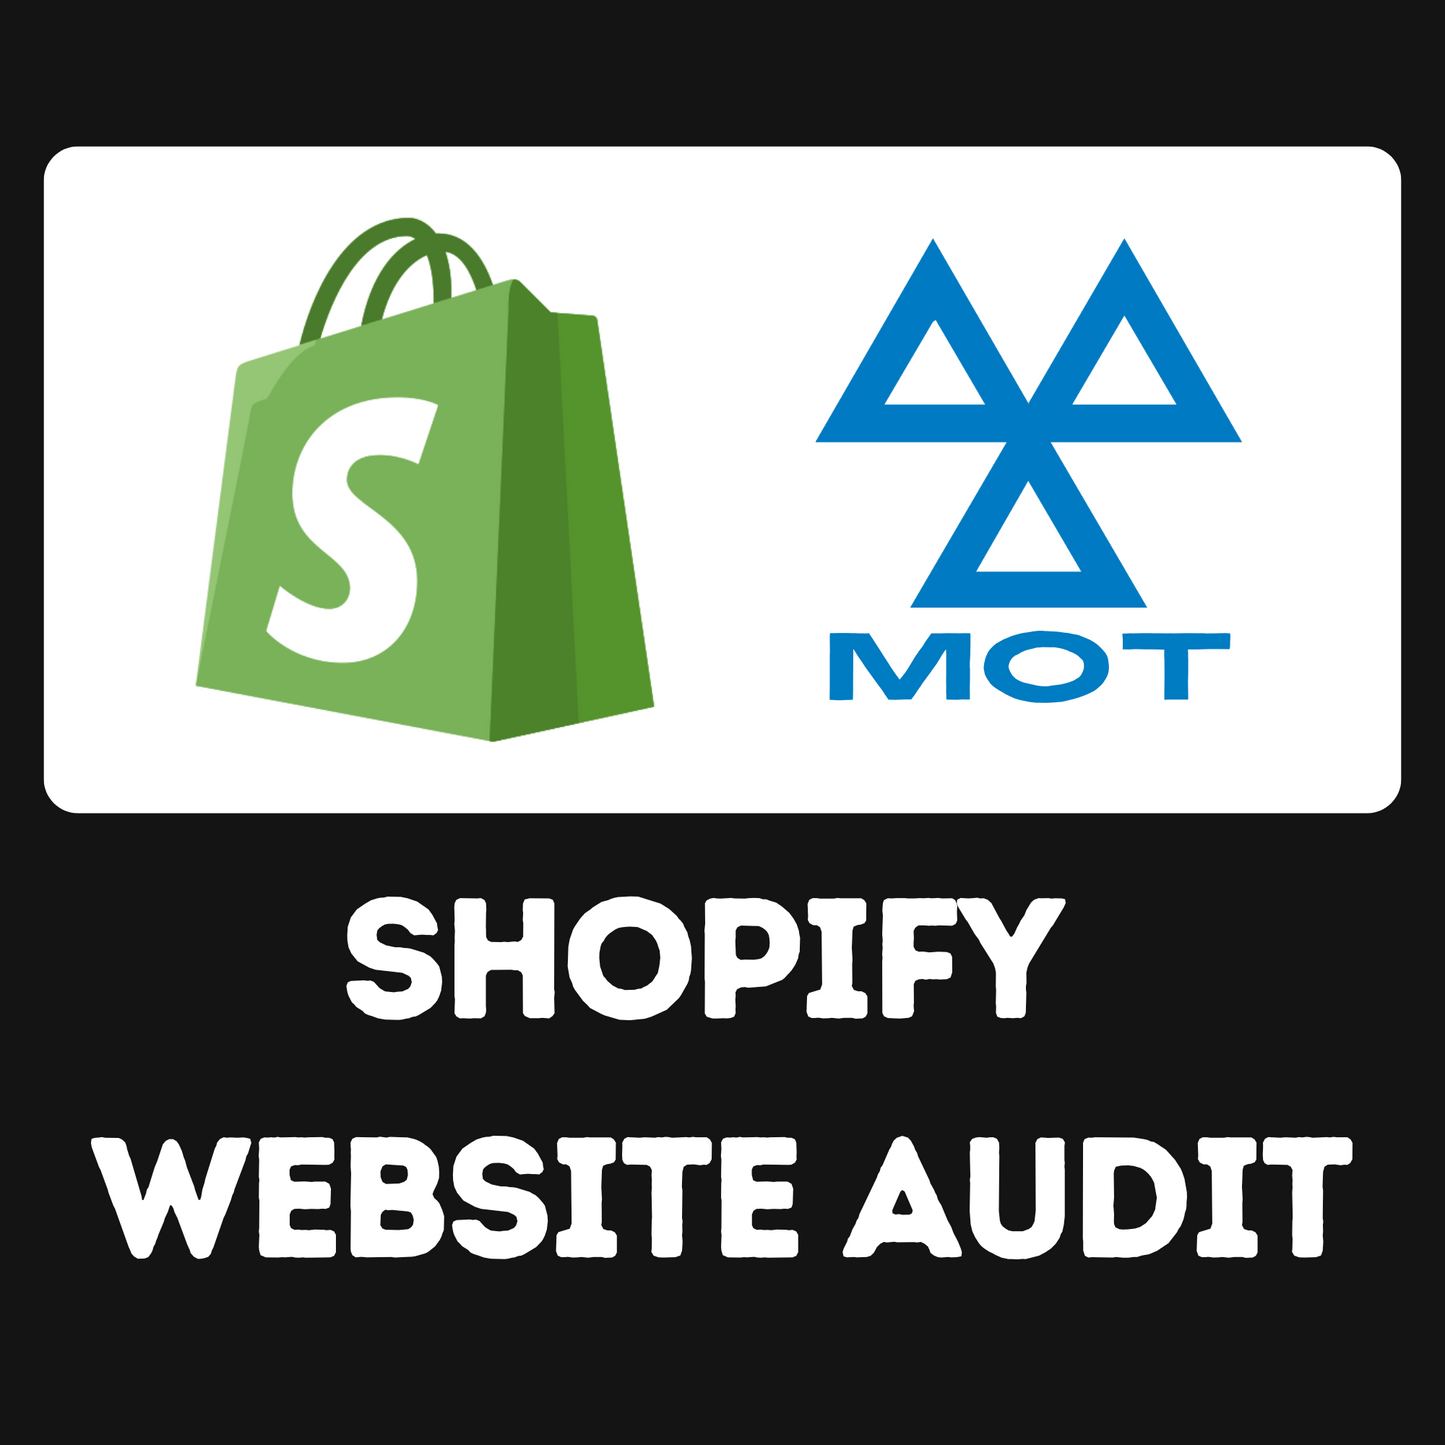 Shopify MOT - Website Audit